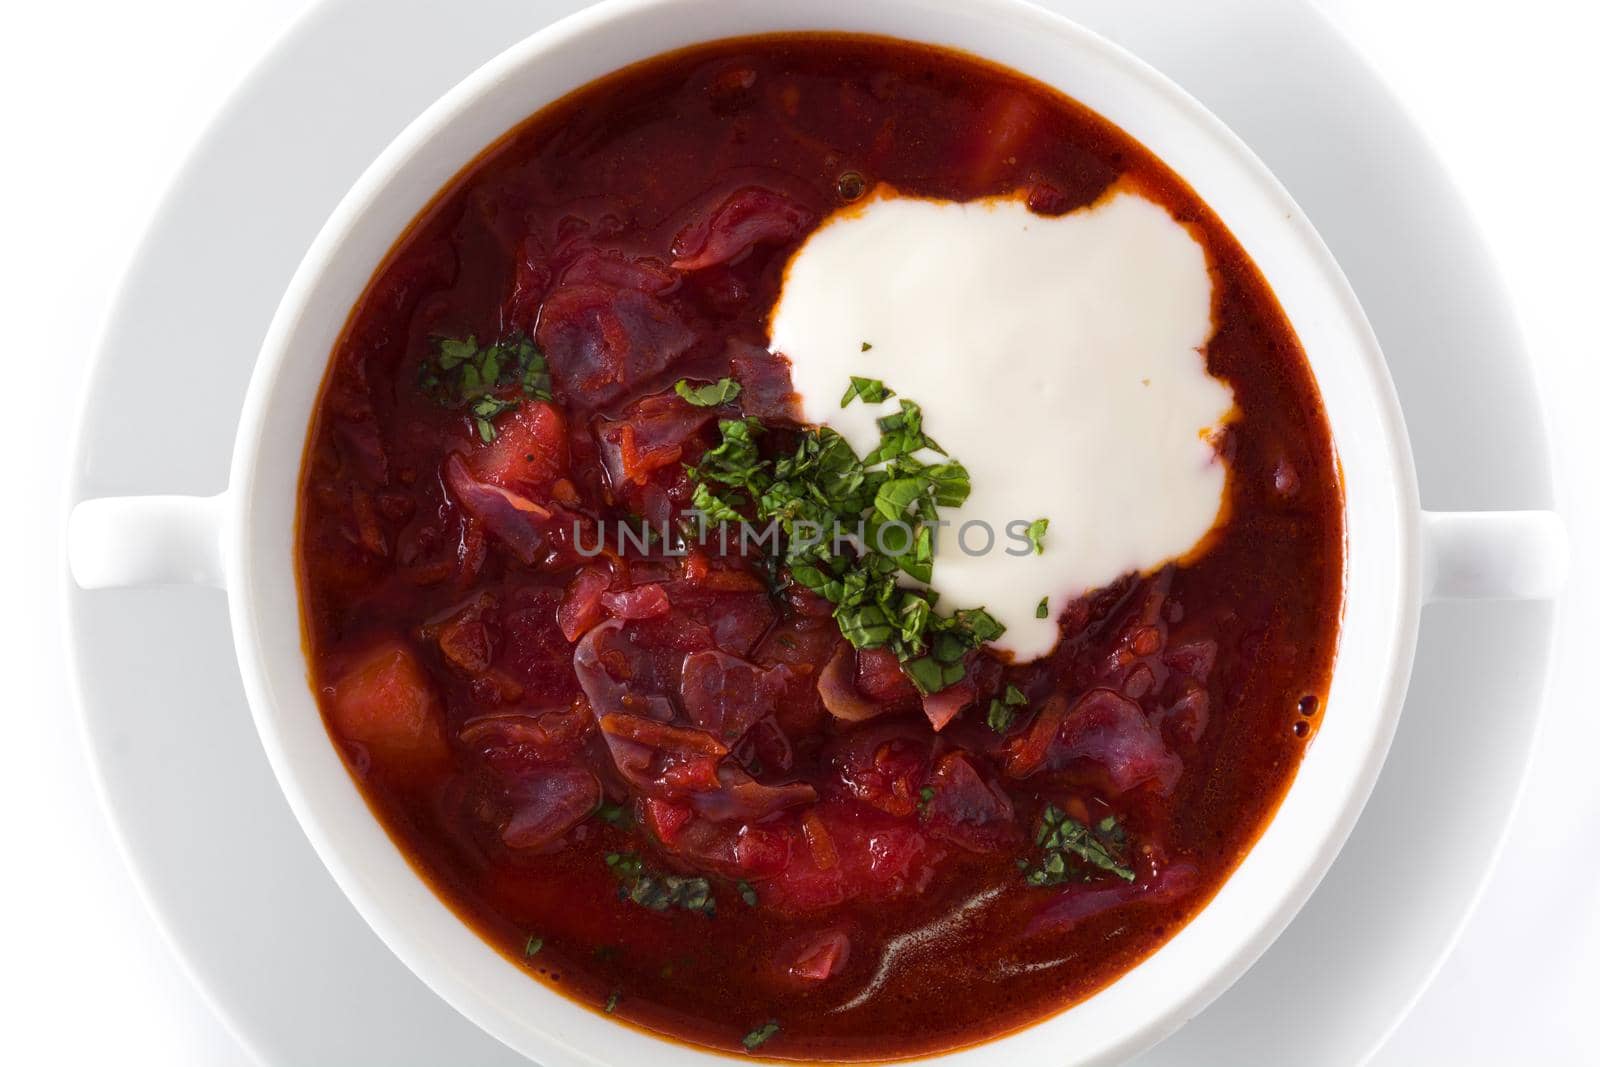 Traditional Ukrainian Russian borsch. Beetroot soup by chandlervid85